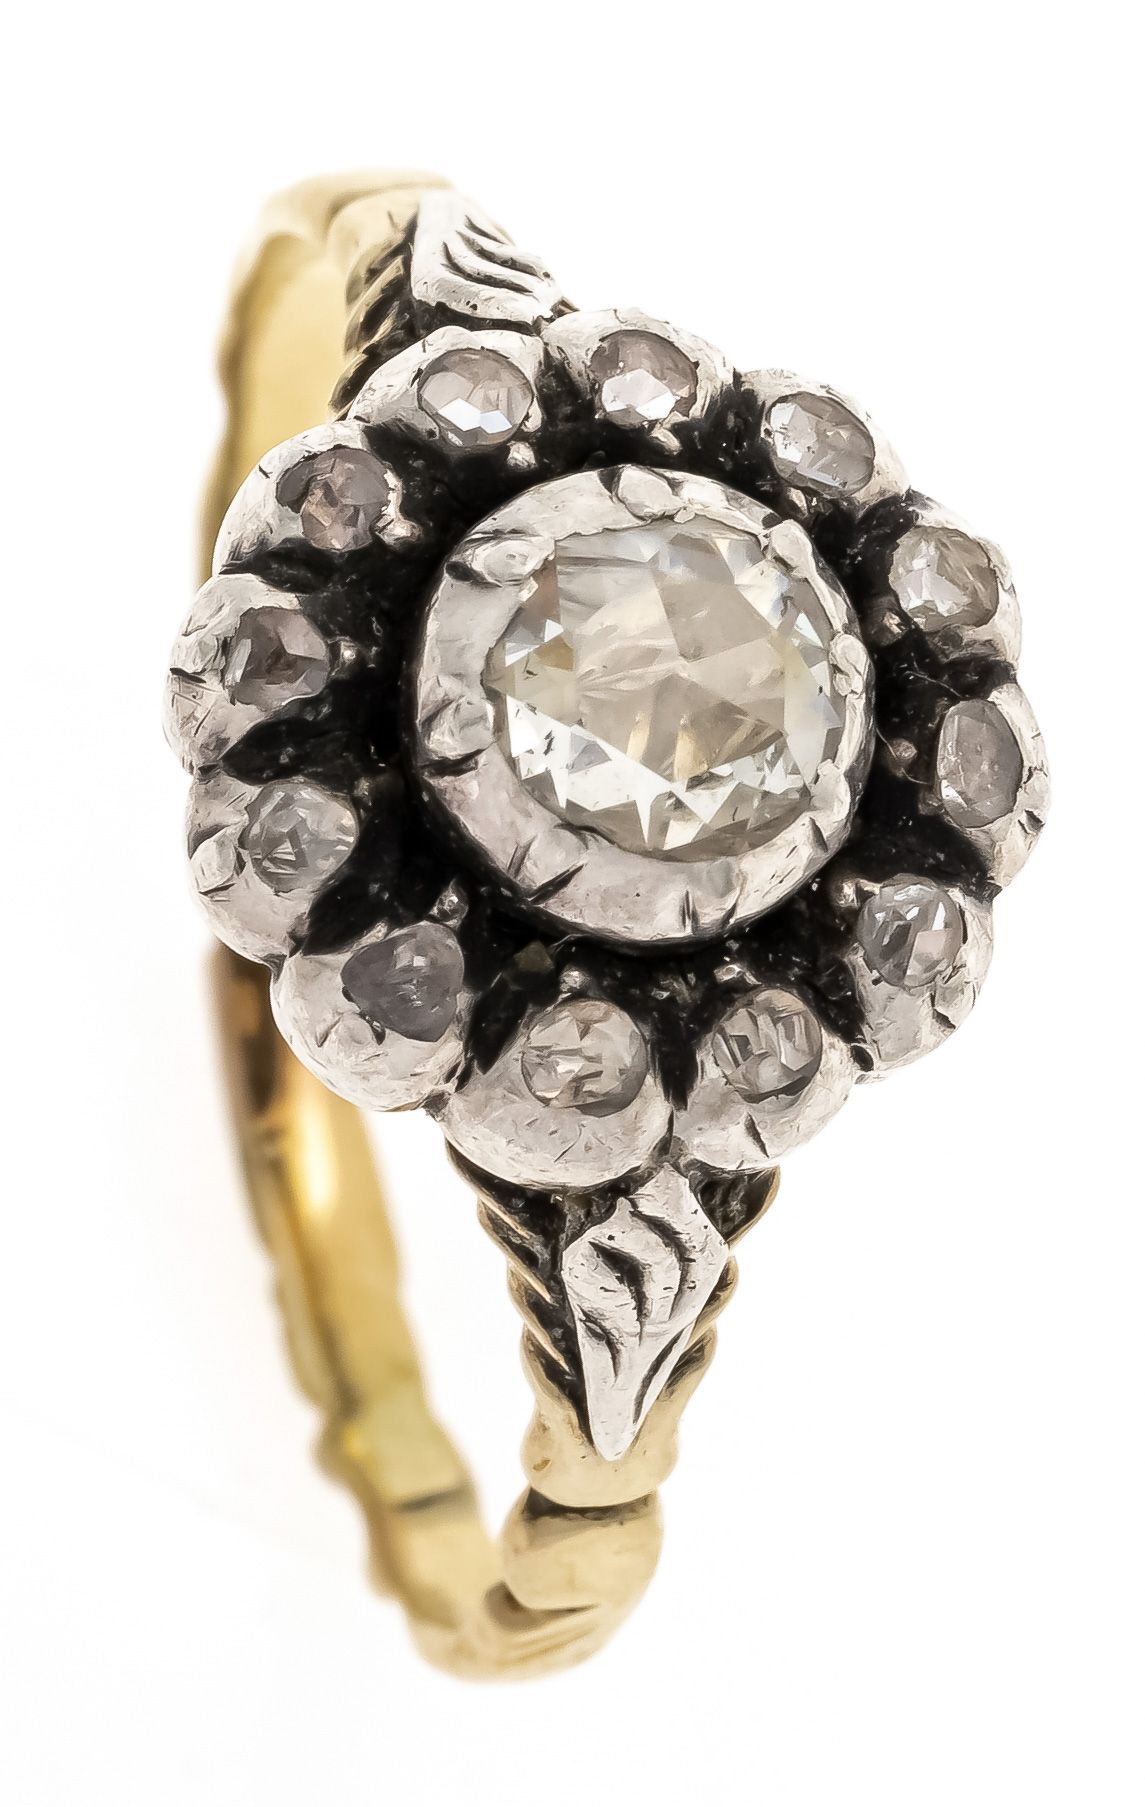 Null 钻石玫瑰戒指GG 585/000和银，有13朵钻石玫瑰，5.1 - 2.0毫米，RG 61，3.9克